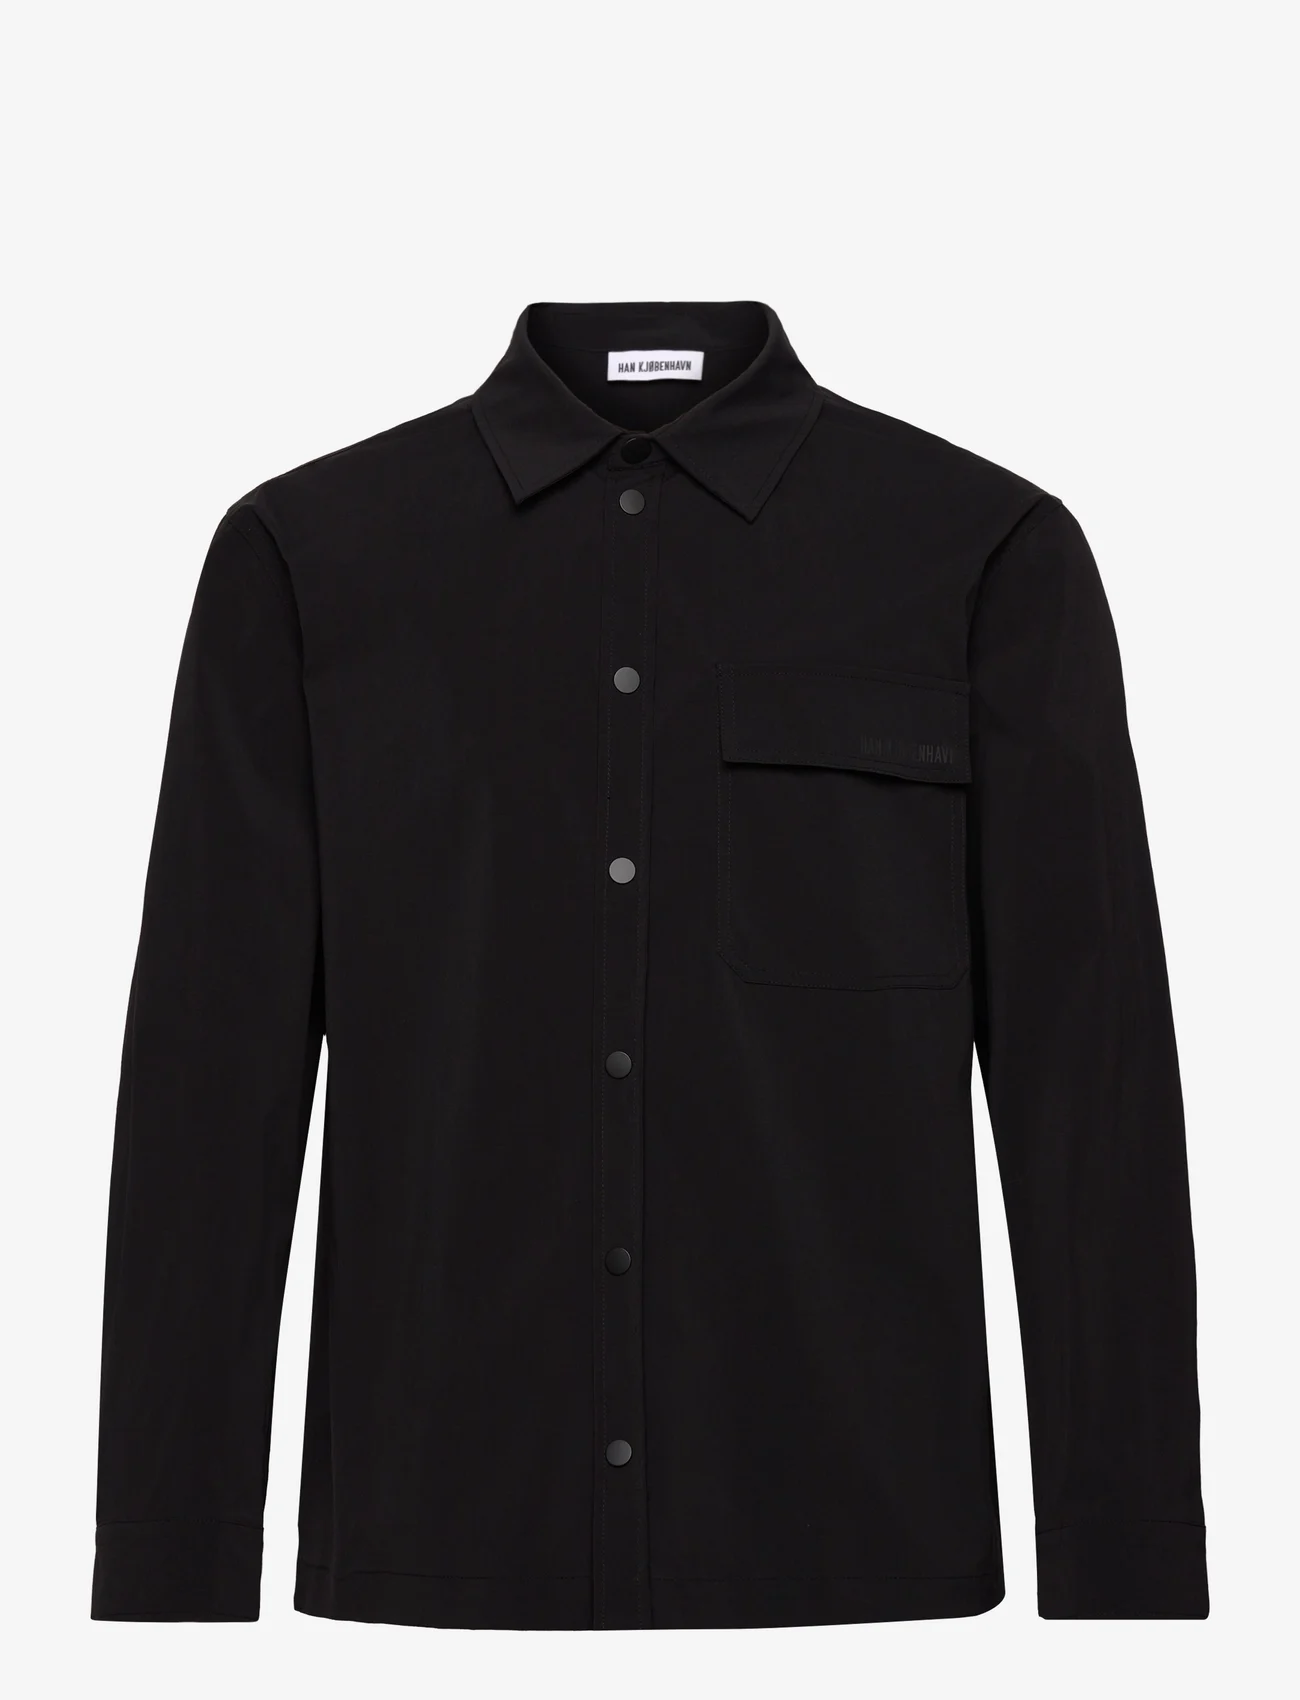 HAN Kjøbenhavn - Nylon Patch Pocket Shirt Long Sleeve - men - black - 0